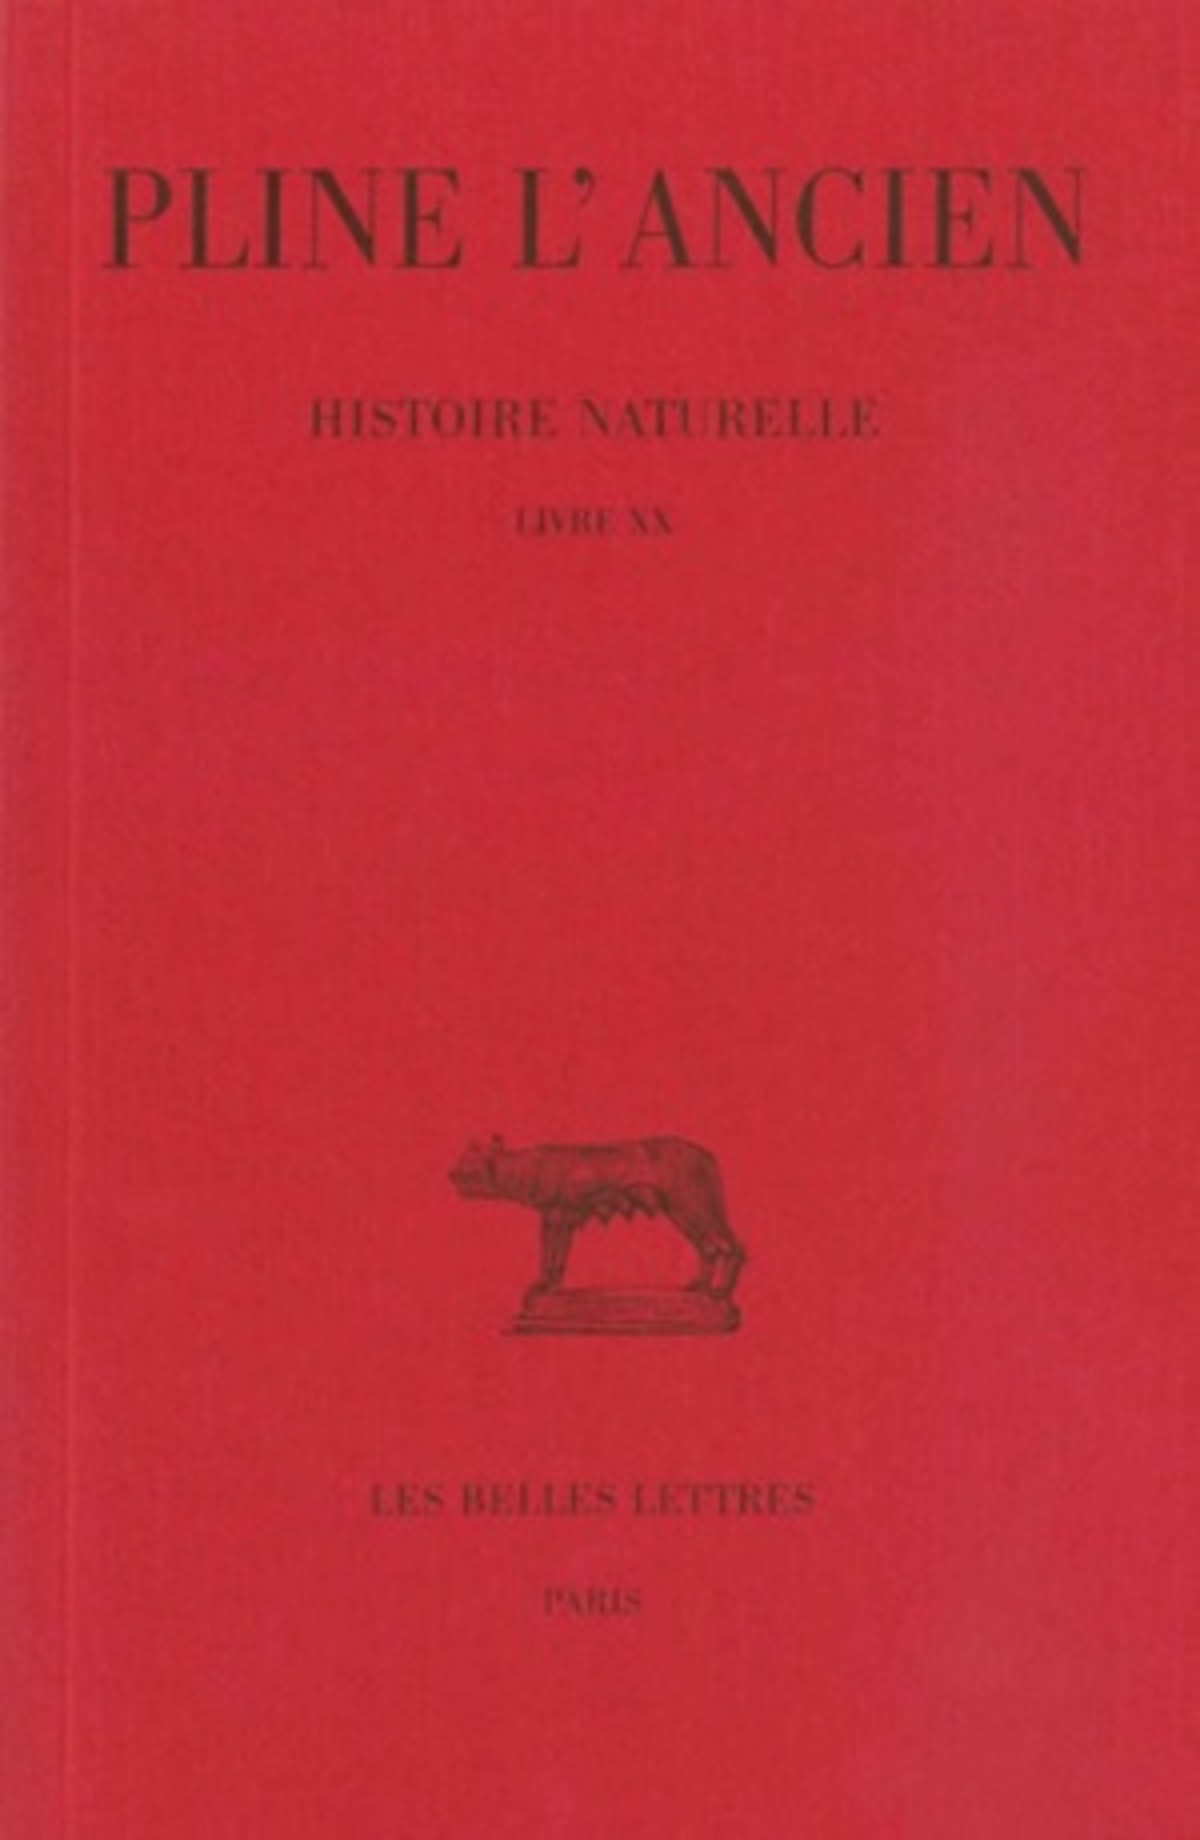 Histoire naturelle. Livre XX